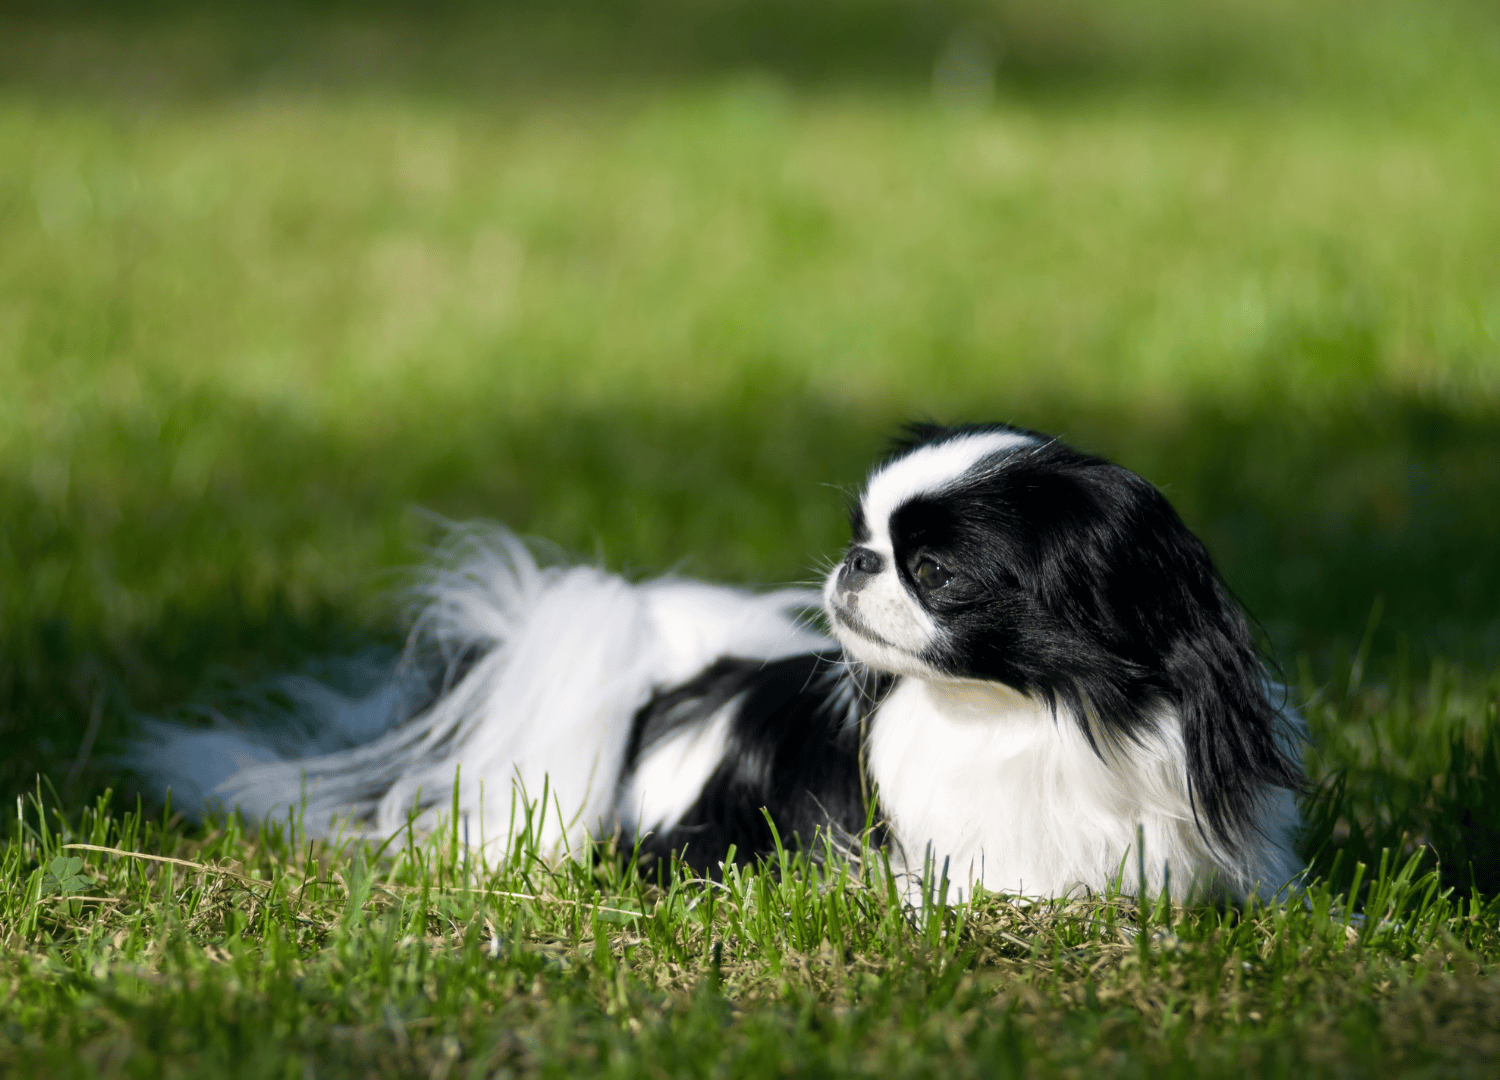 black and white dog breeds - Japanese Chin